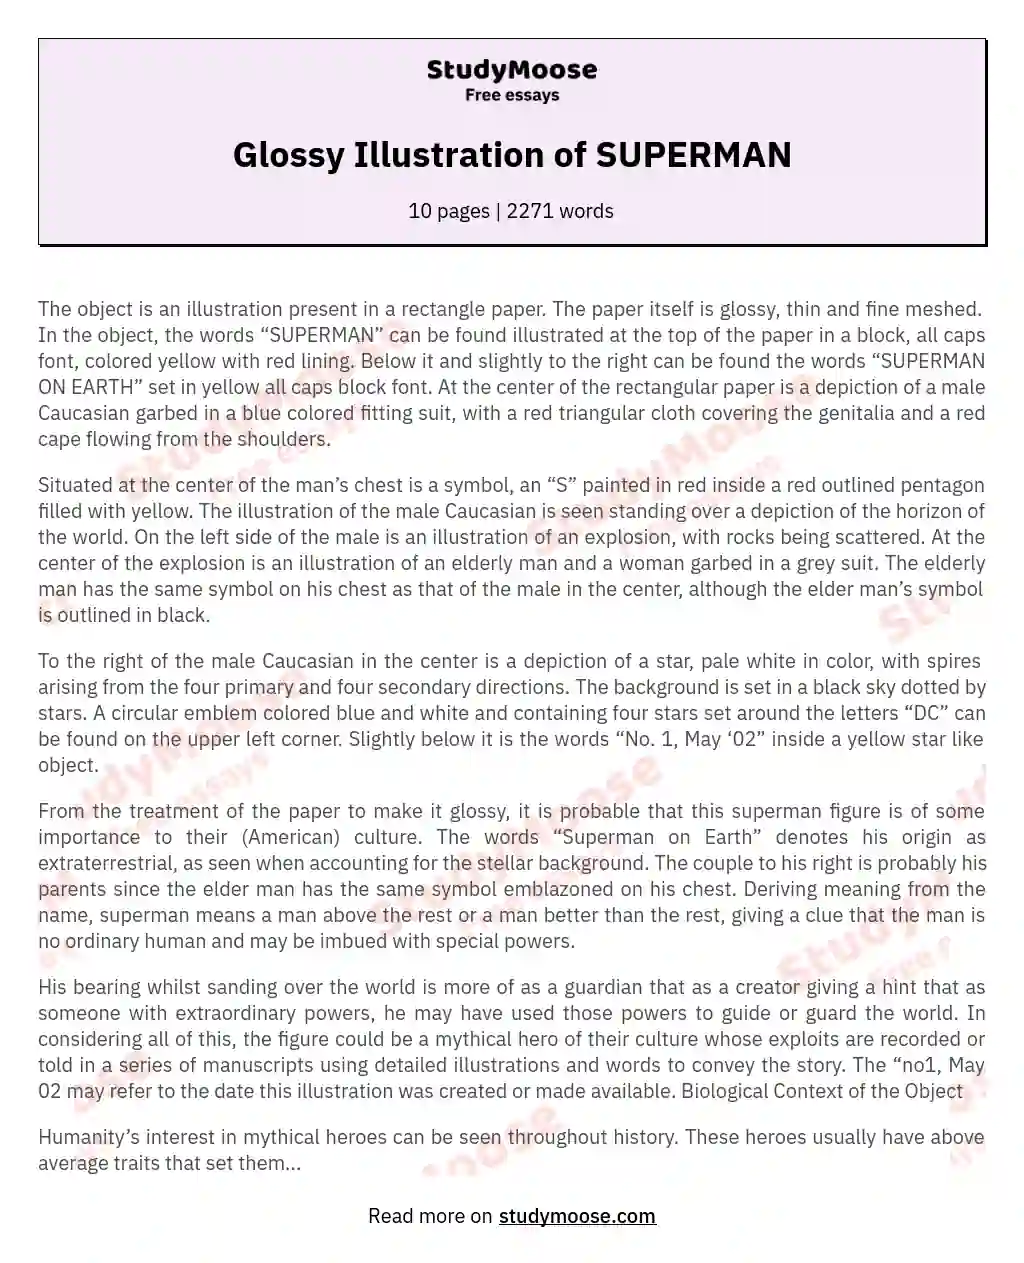 Glossy Illustration of SUPERMAN essay